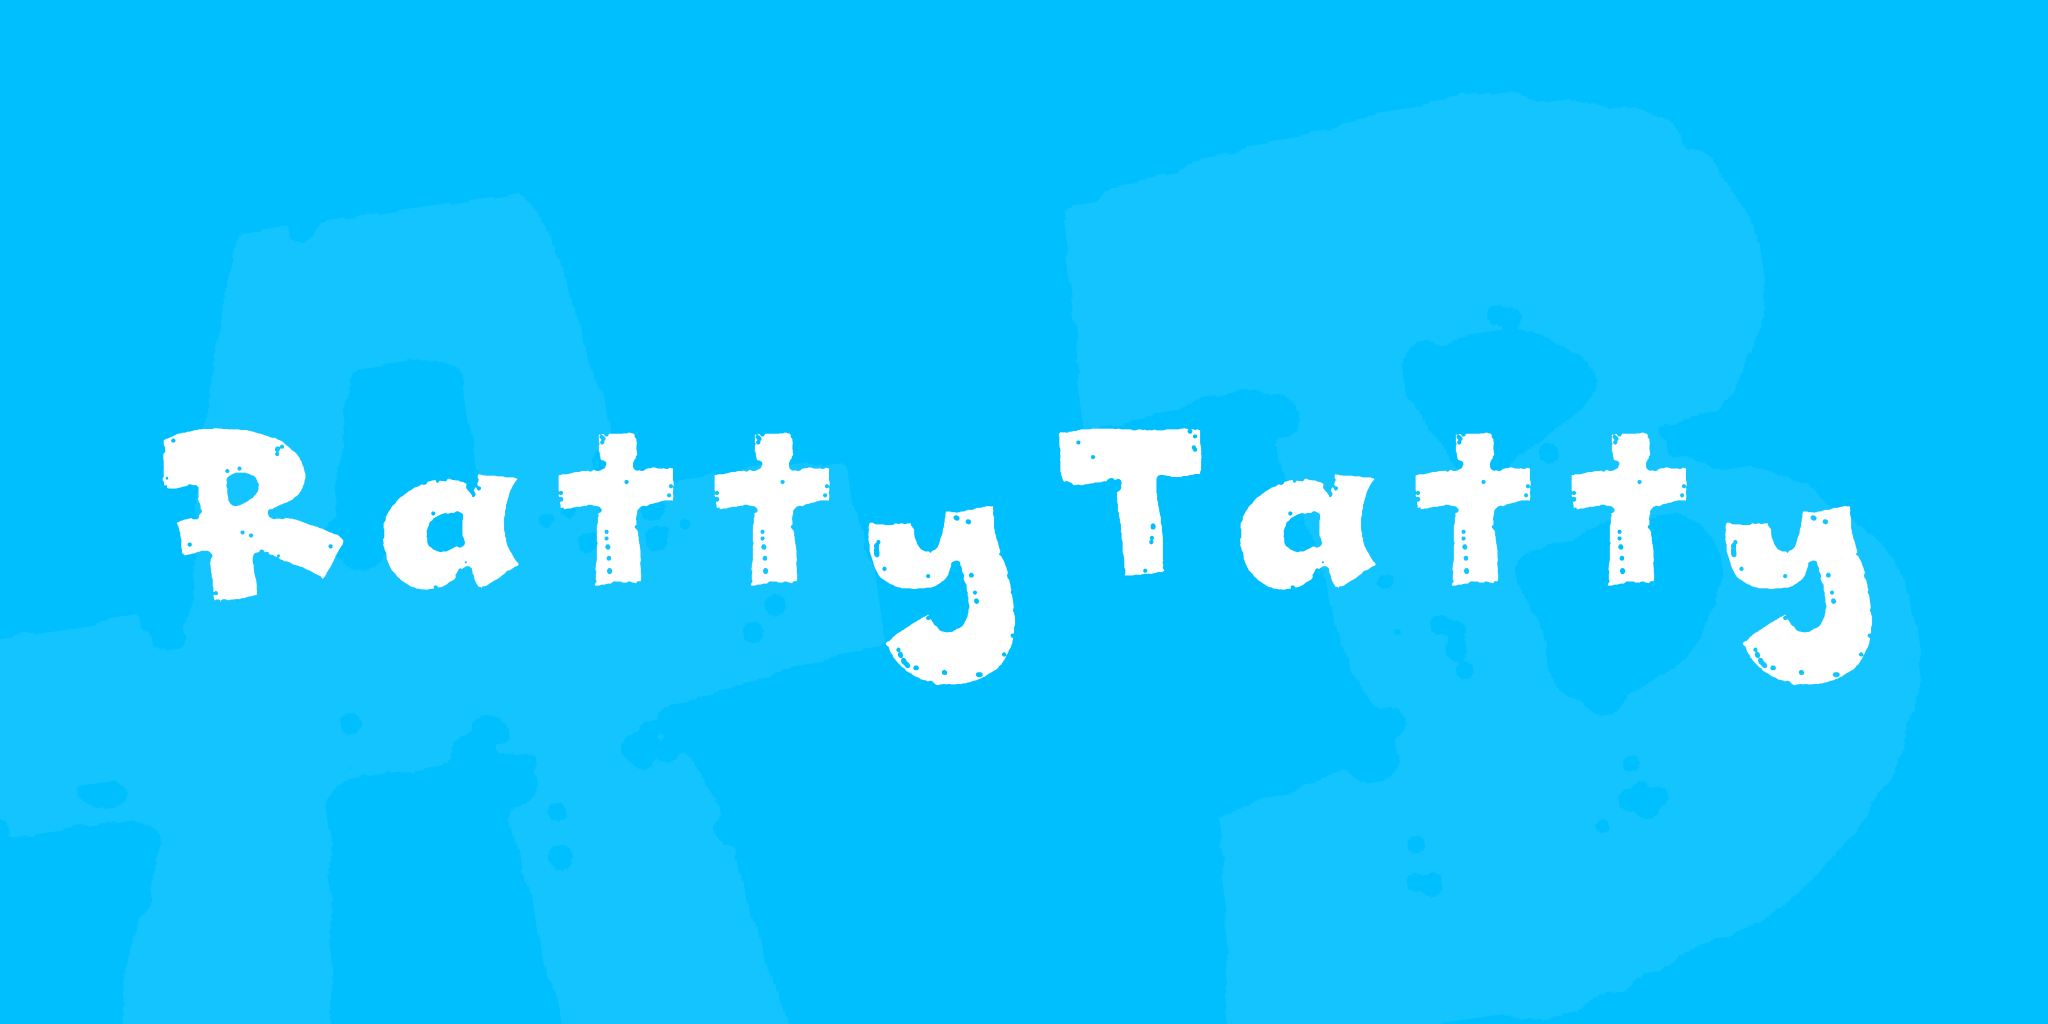 Ratty Tatty